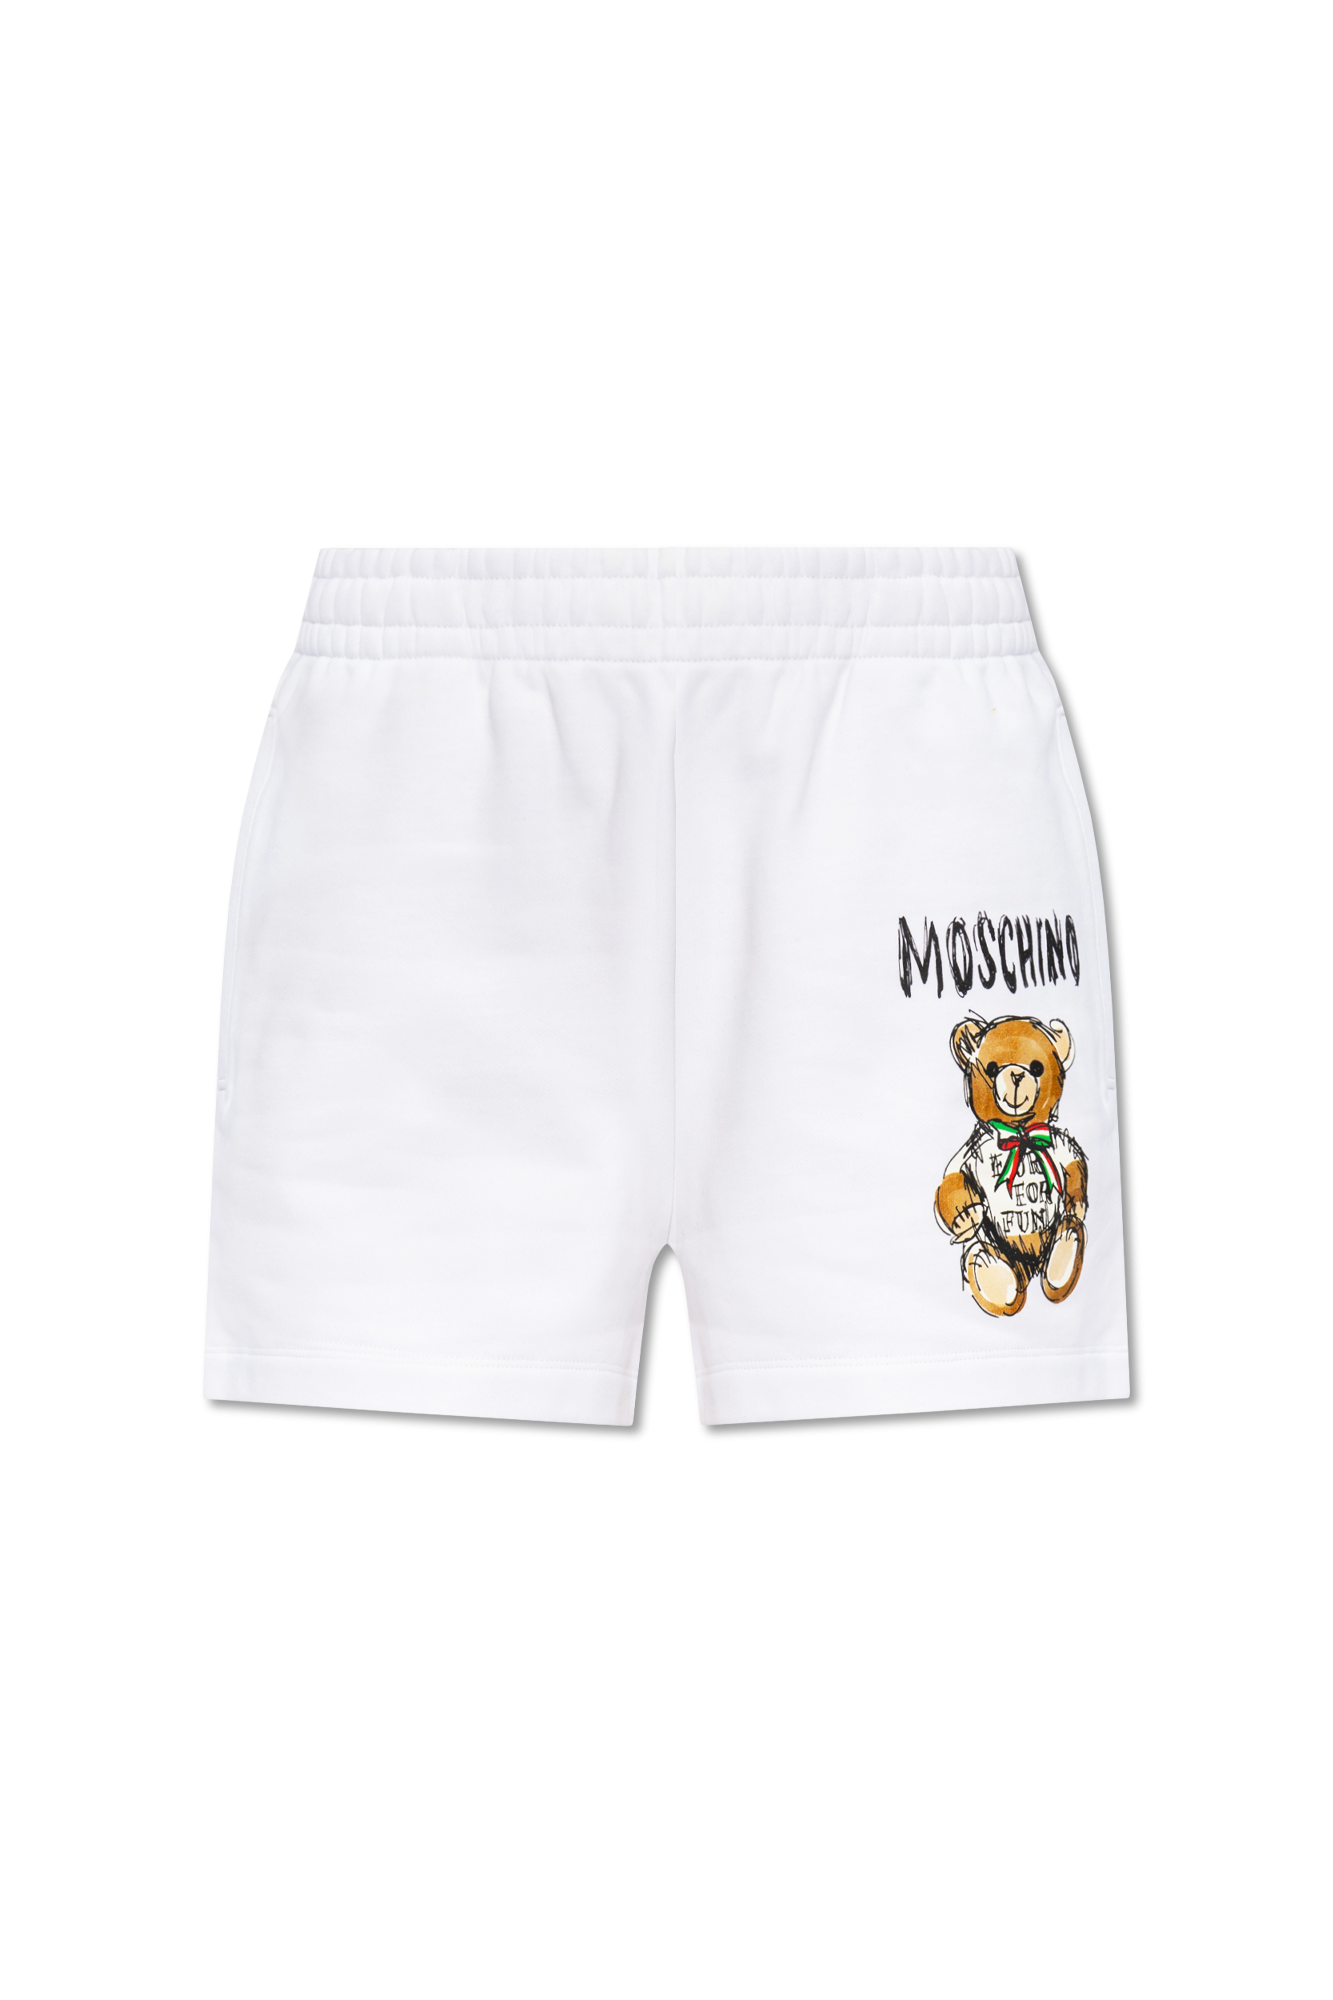 Moschino Shorts with logo, Women's Clothing